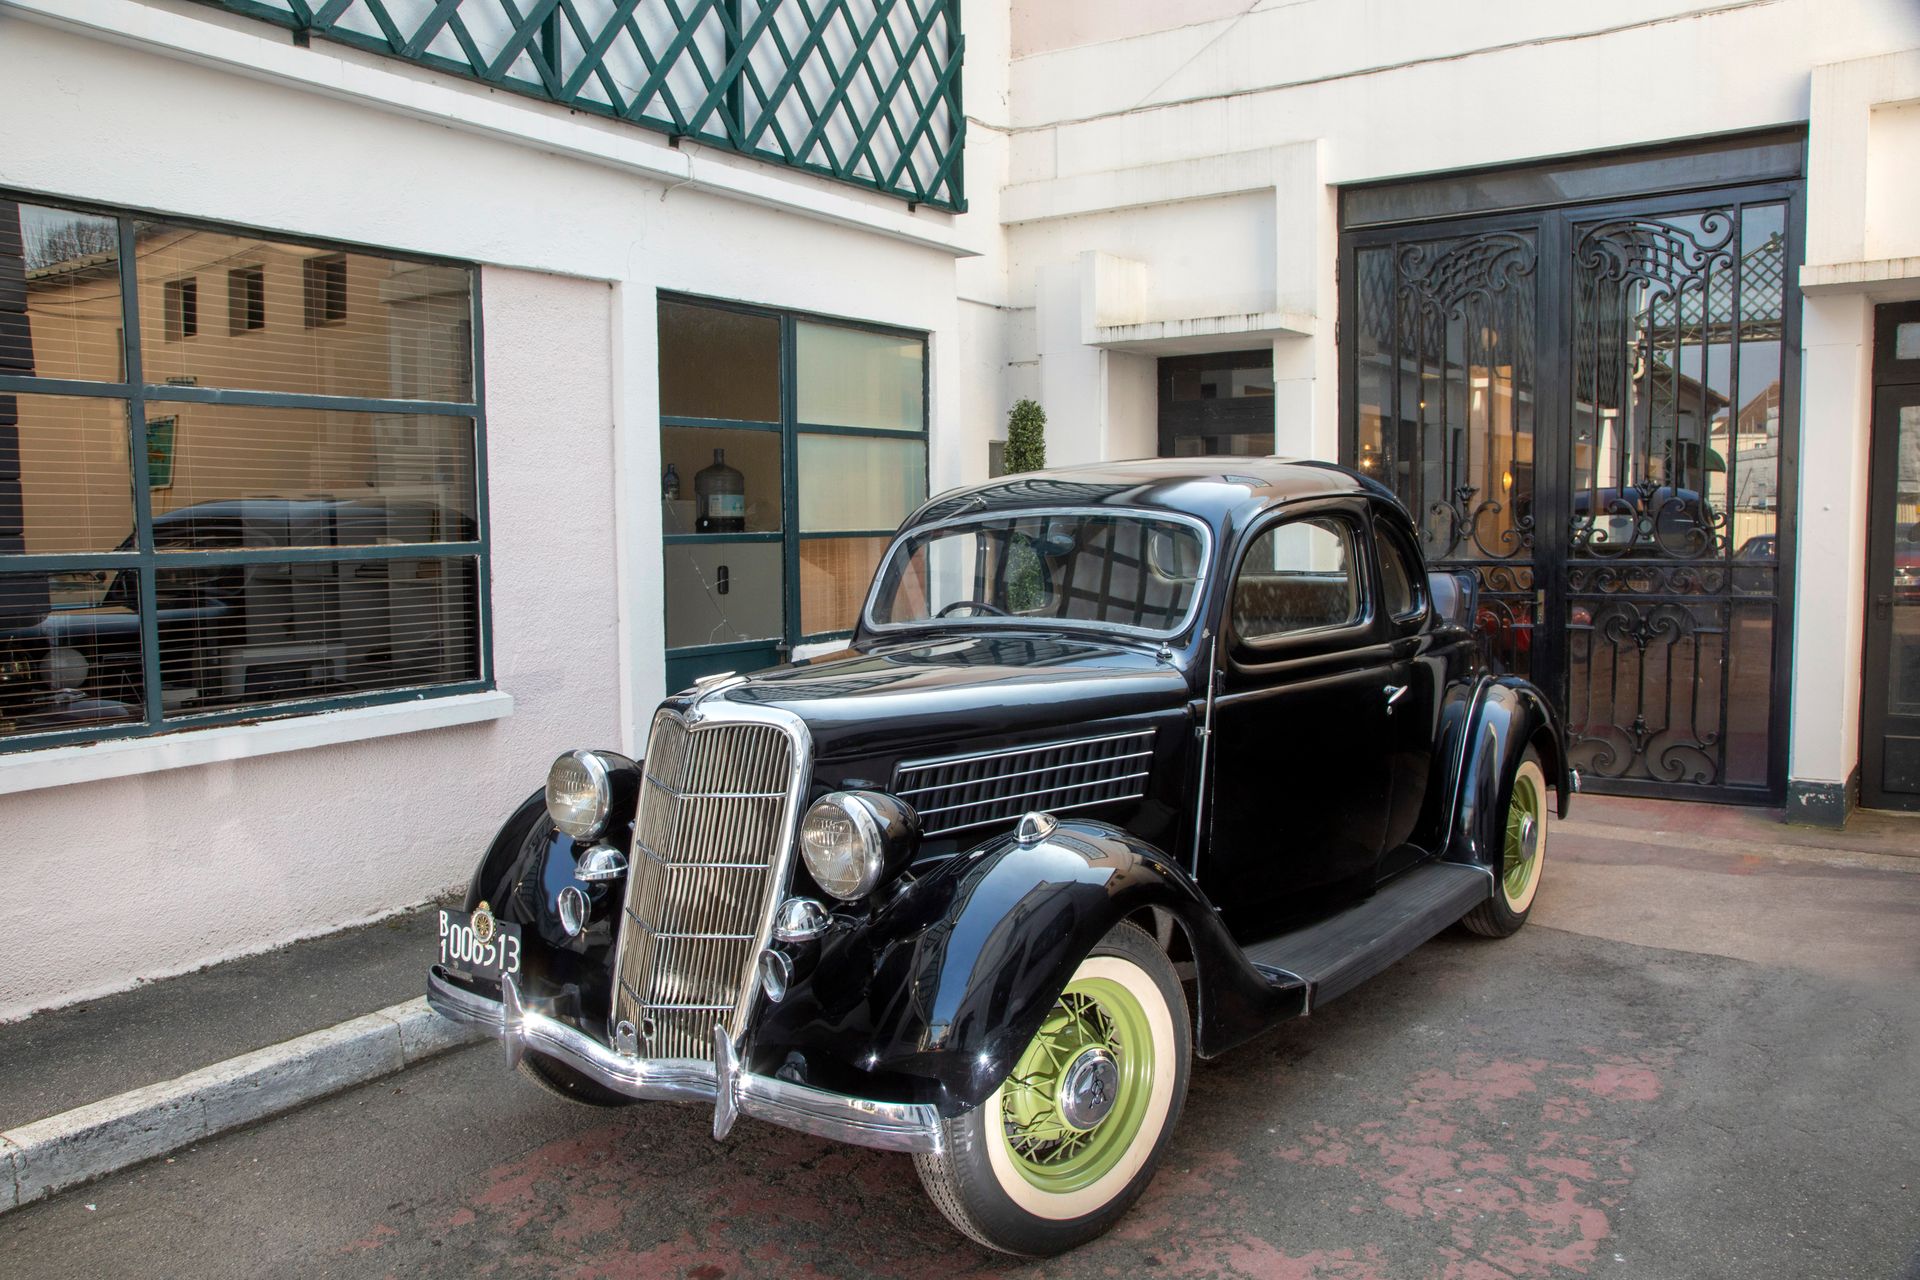 Null L.夫人的遗产 无保留
1935年的福特汽车
V8型
歌剧轿跑车
将在收藏品中登记
20 000 / 30 000 €
无底价出售
尽管设计和开发V8&hellip;